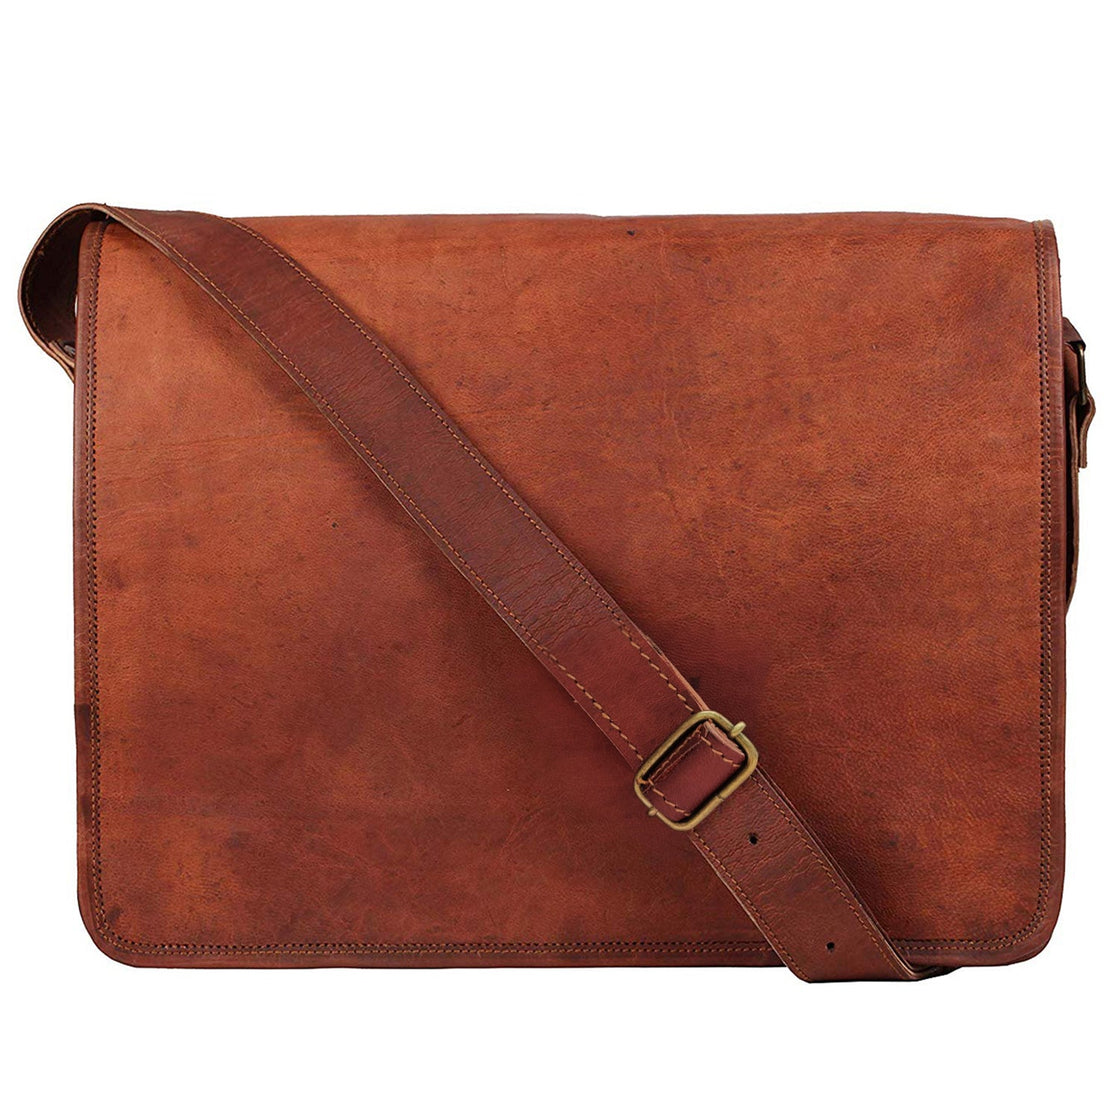 Artisian Leather Messenger Bag Crossbody Laptop Satchel (14 inch)